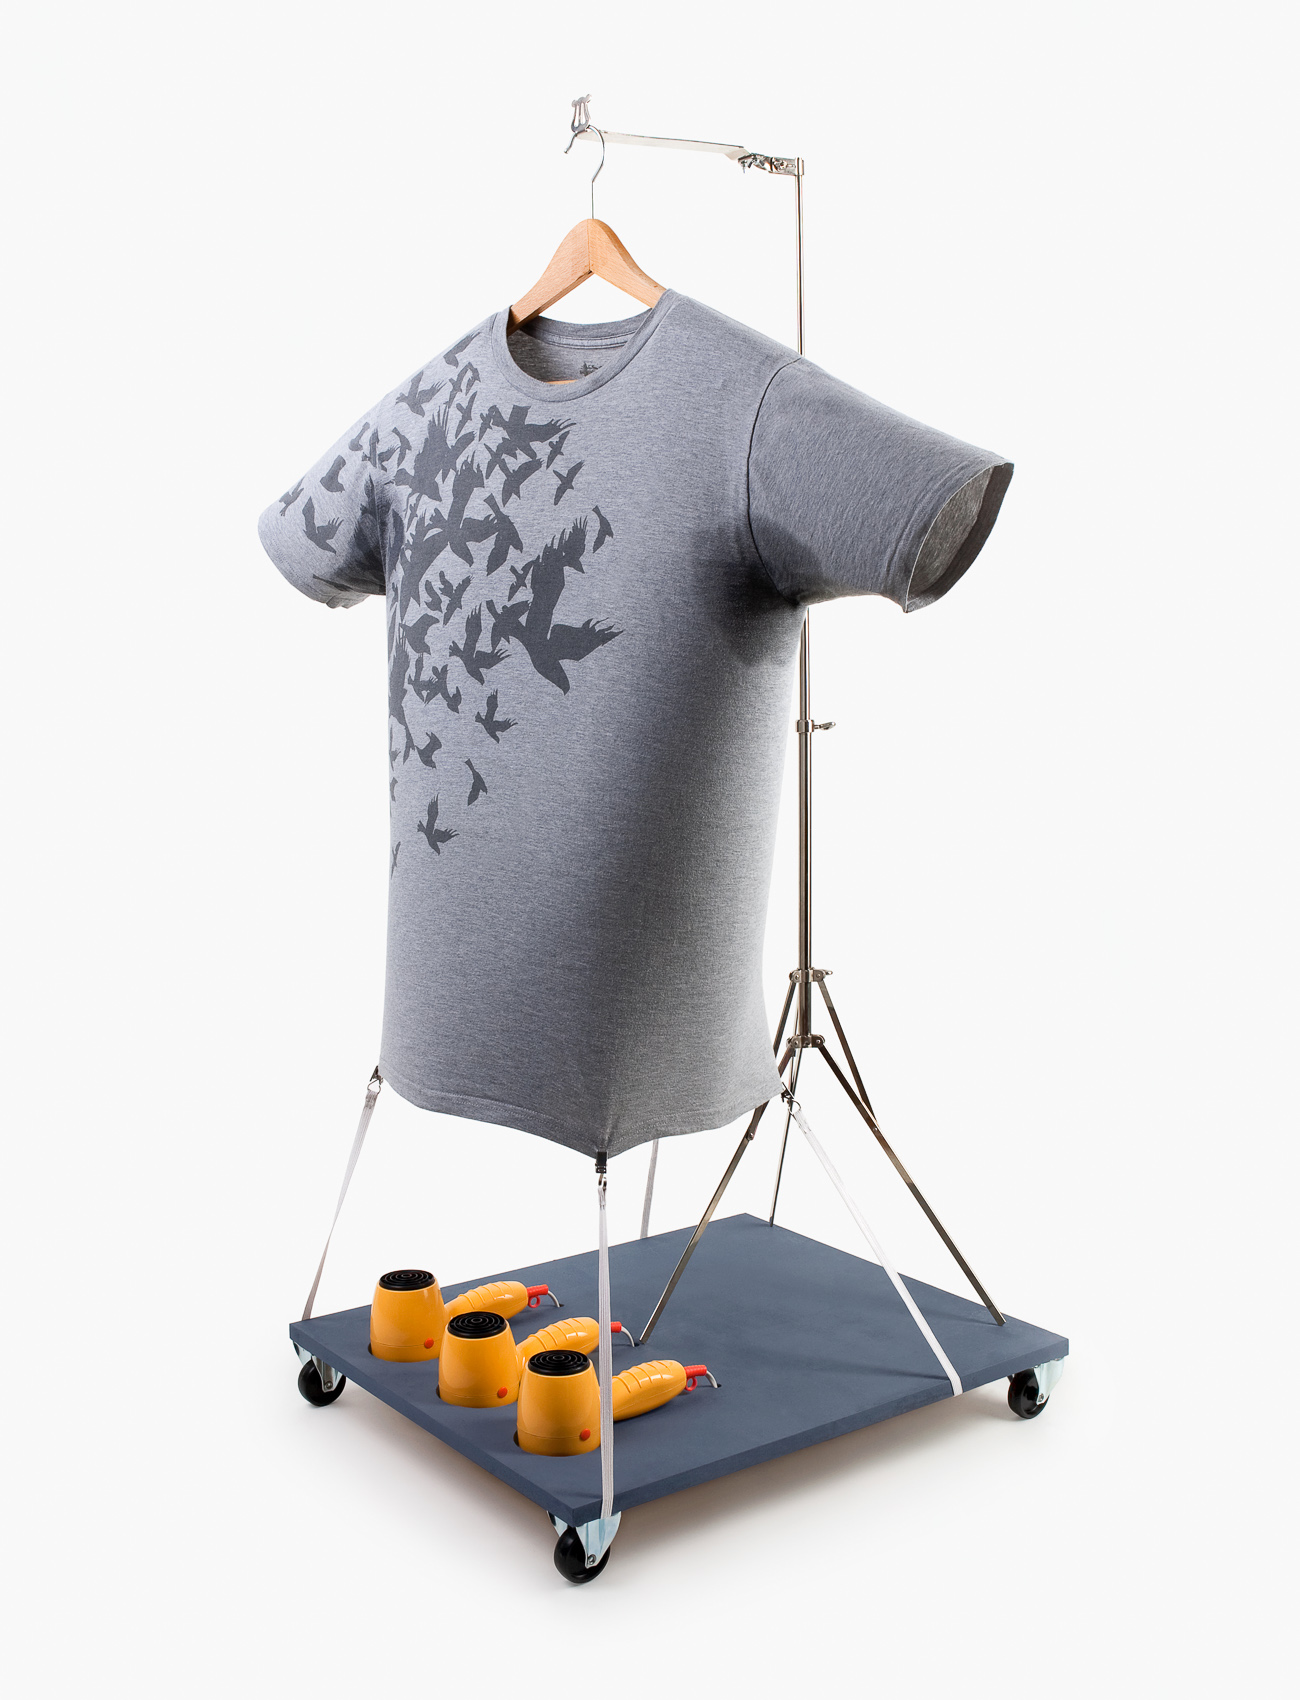 Portable sweaty armpit T-shirt dryer. Prototypes | PATRICK STRATTNER PHOTOGRAPHY